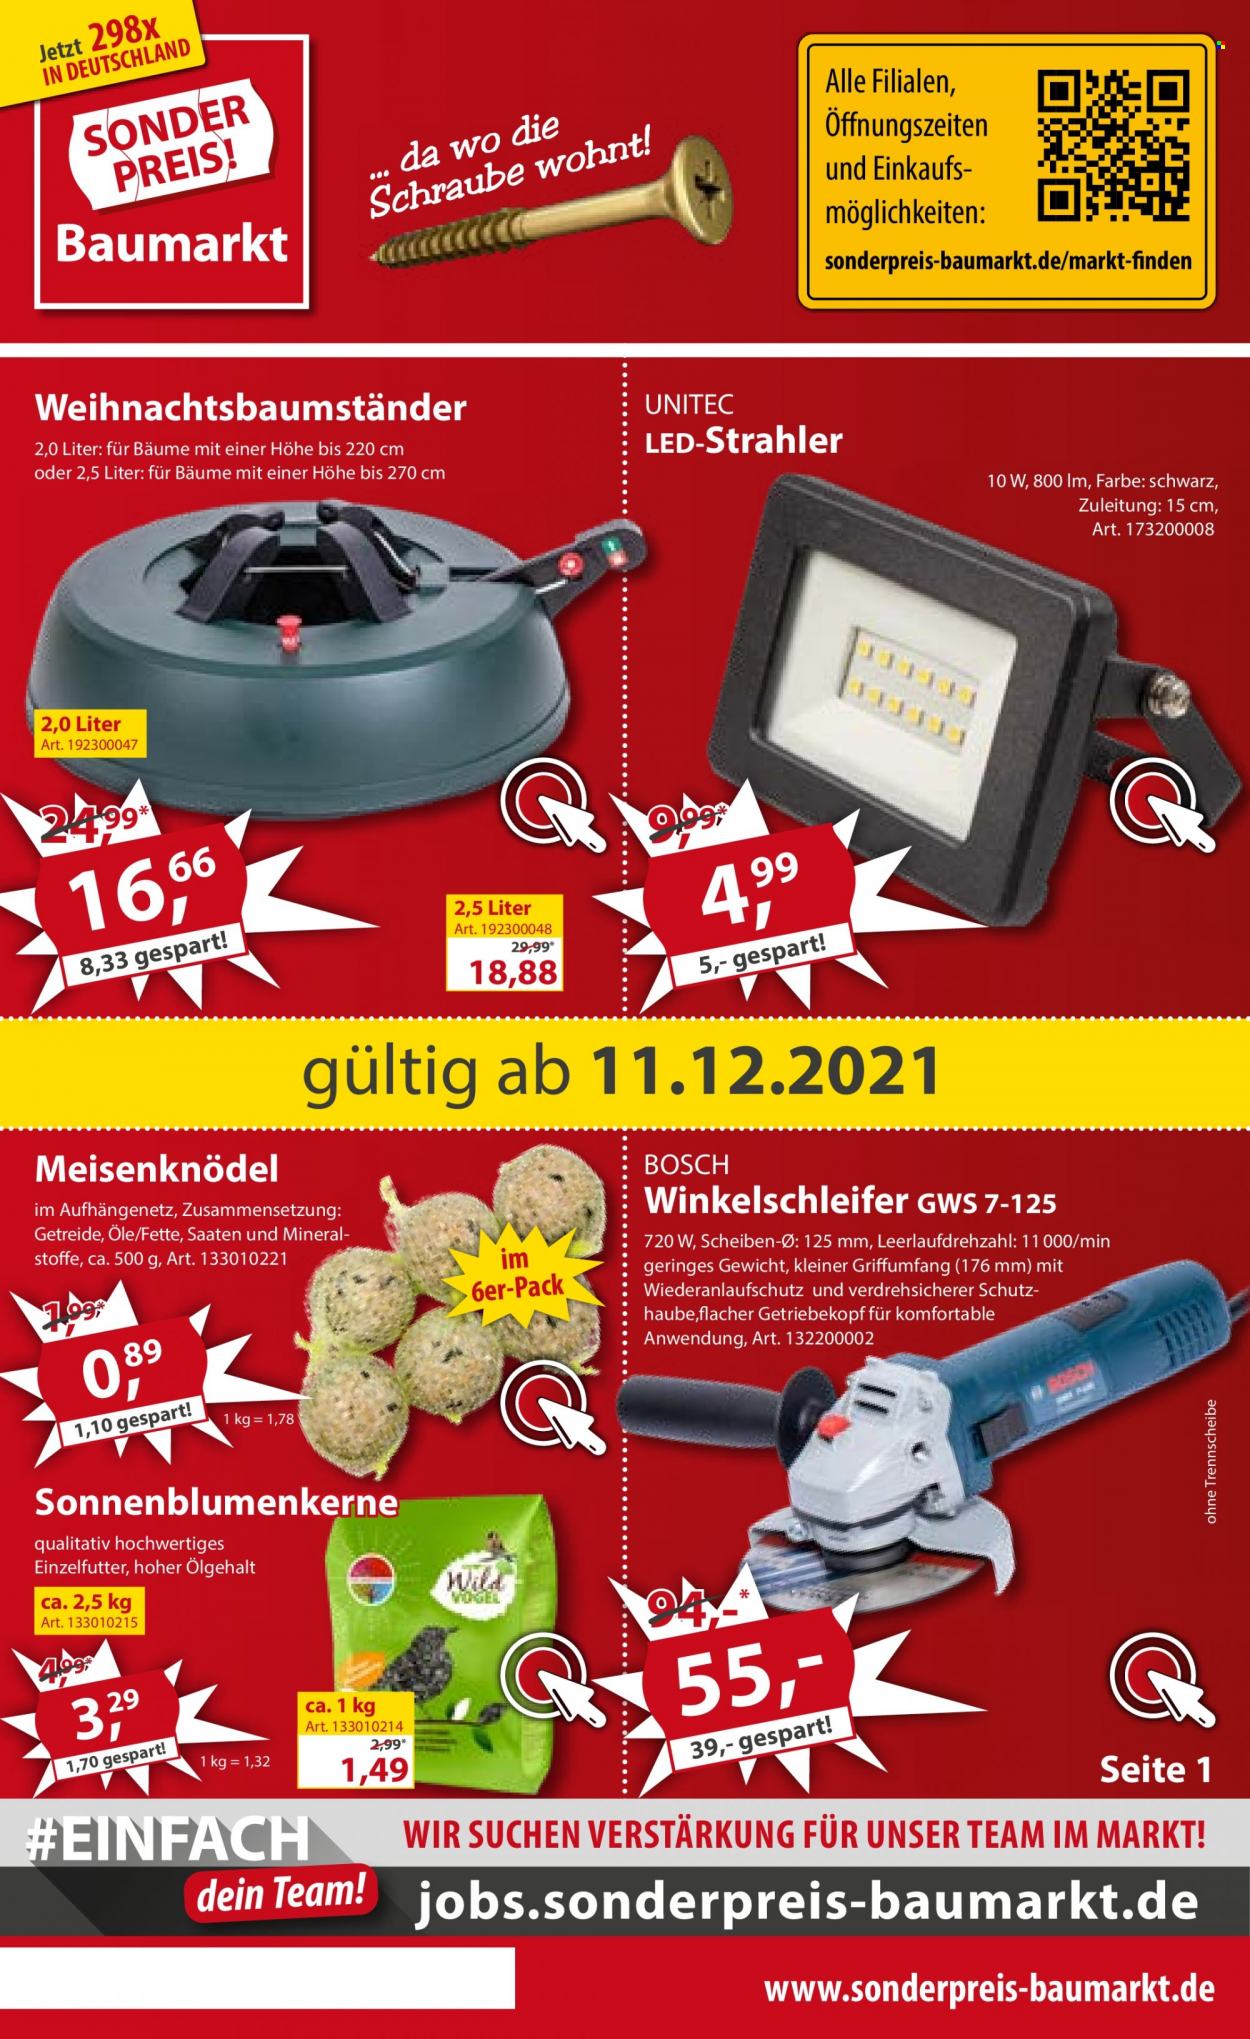 thumbnail - Prospekte Sonderpreis-Baumarkt - 11.12.2021 - 17.12.2021 - Produkte in Aktion - Bosch, Sonnenblumenkerne, Meisenknödel, Winkelschleifer. Seite 1.